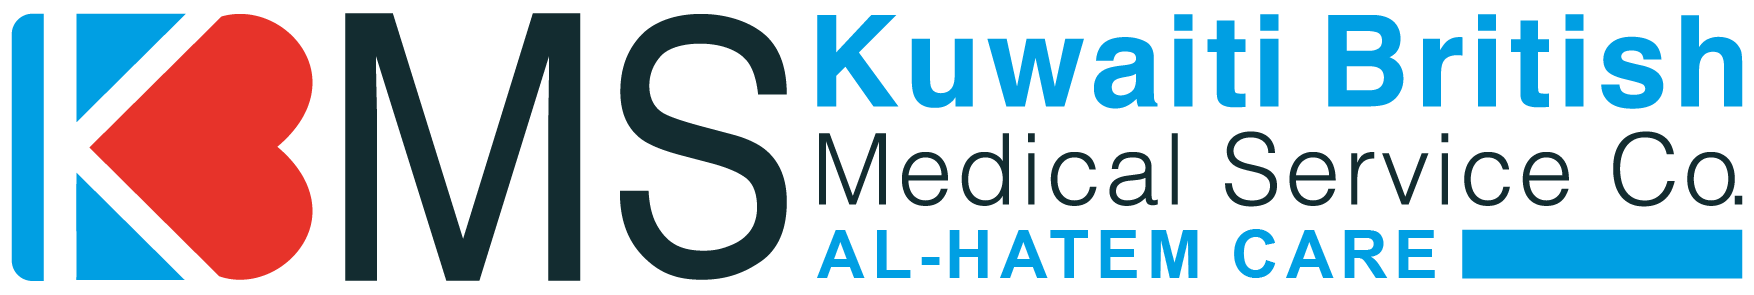 KUWAITI BRITISH MEDICAL SERVICES